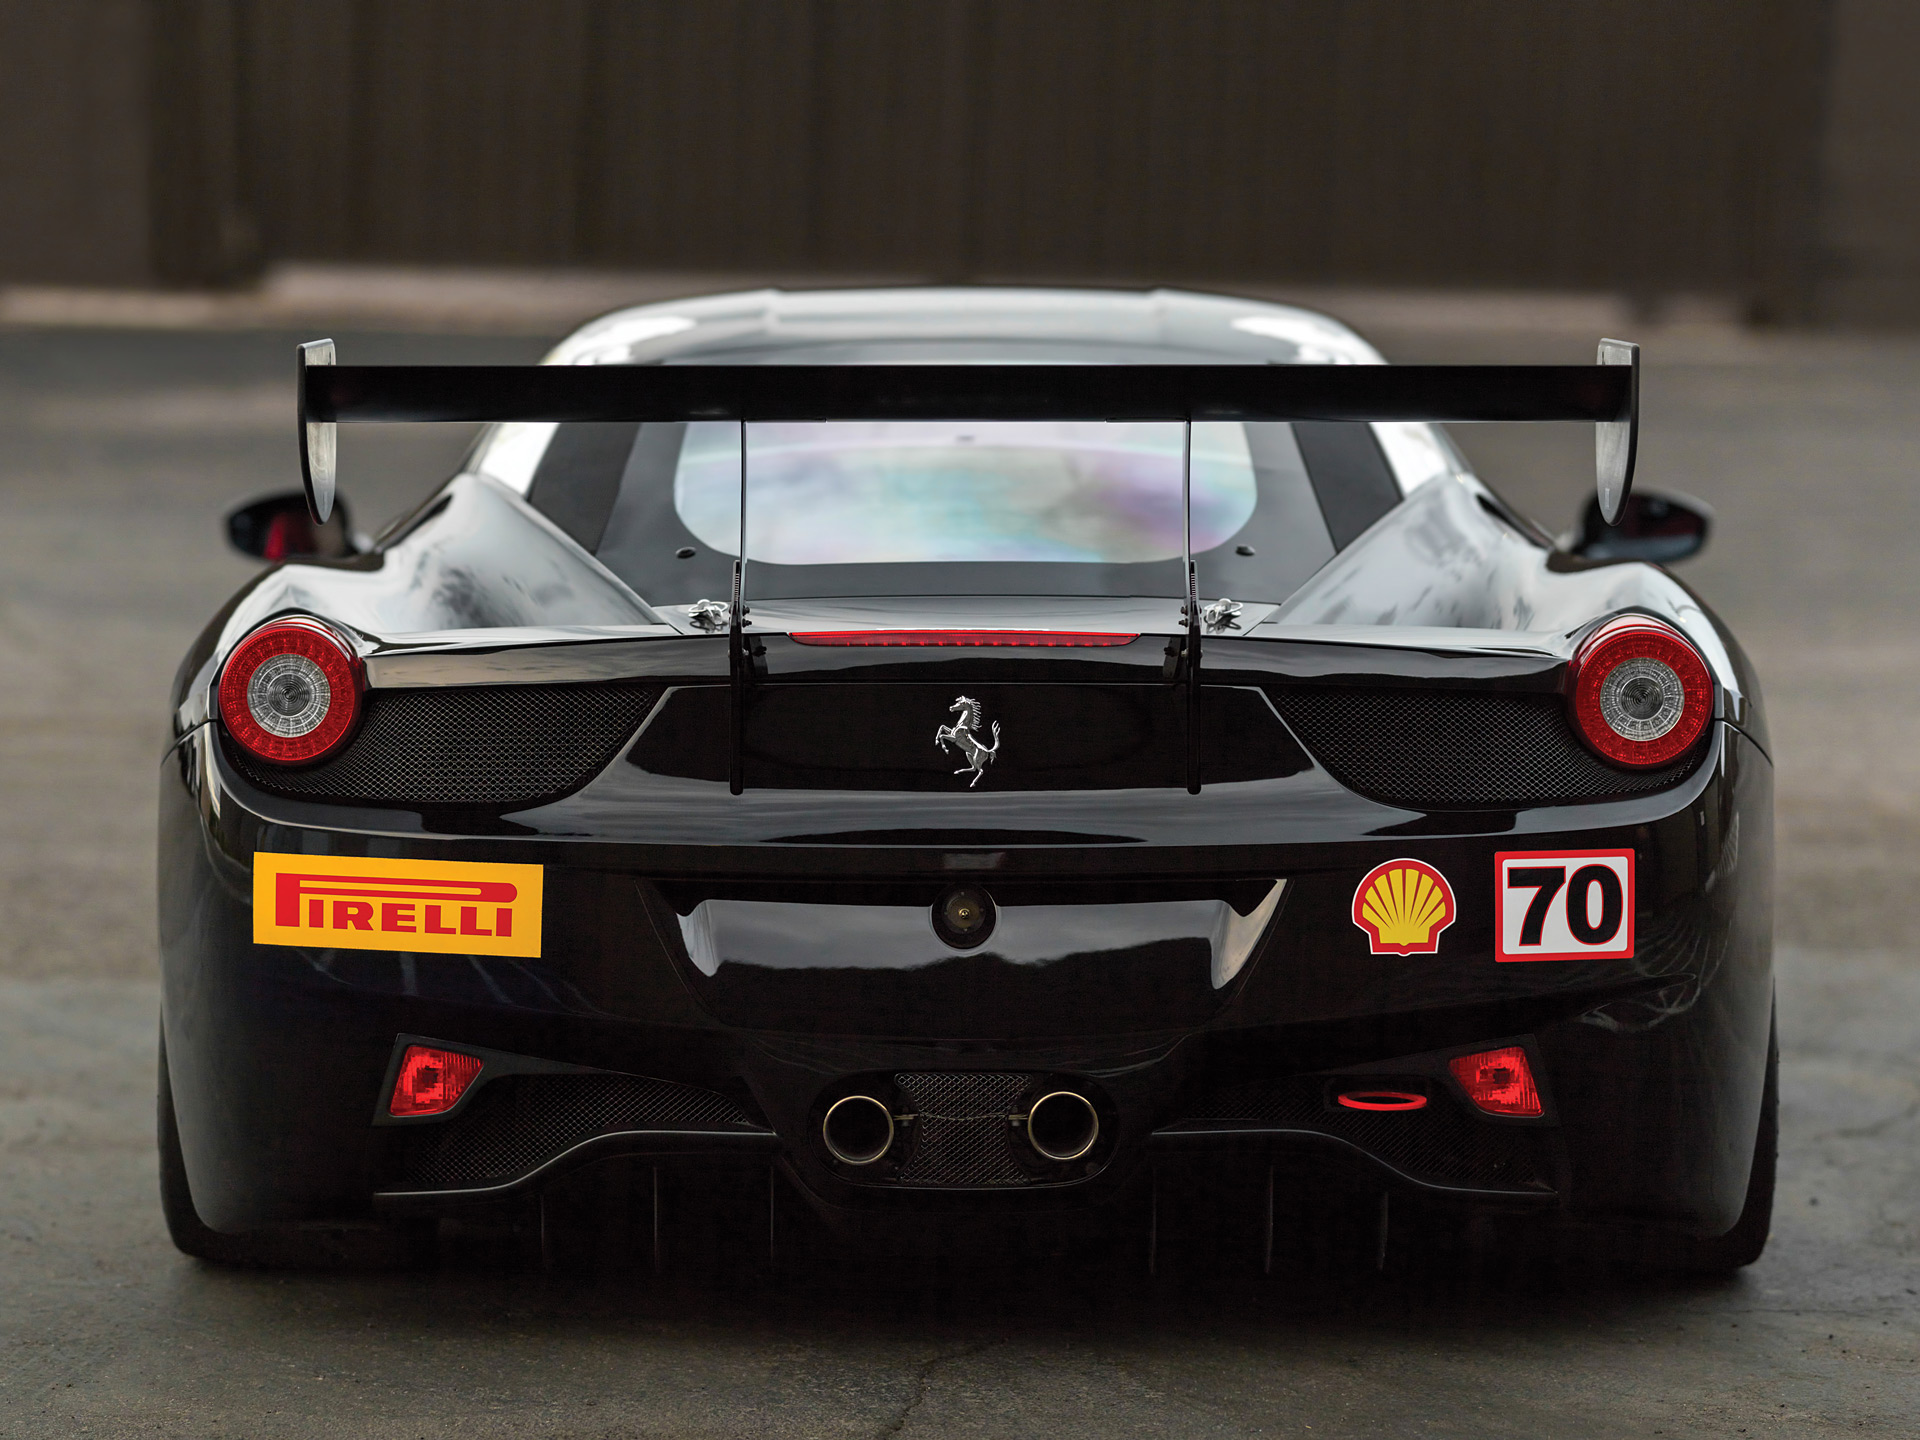  2014 Ferrari 458 Challenge Evoluzione Wallpaper.